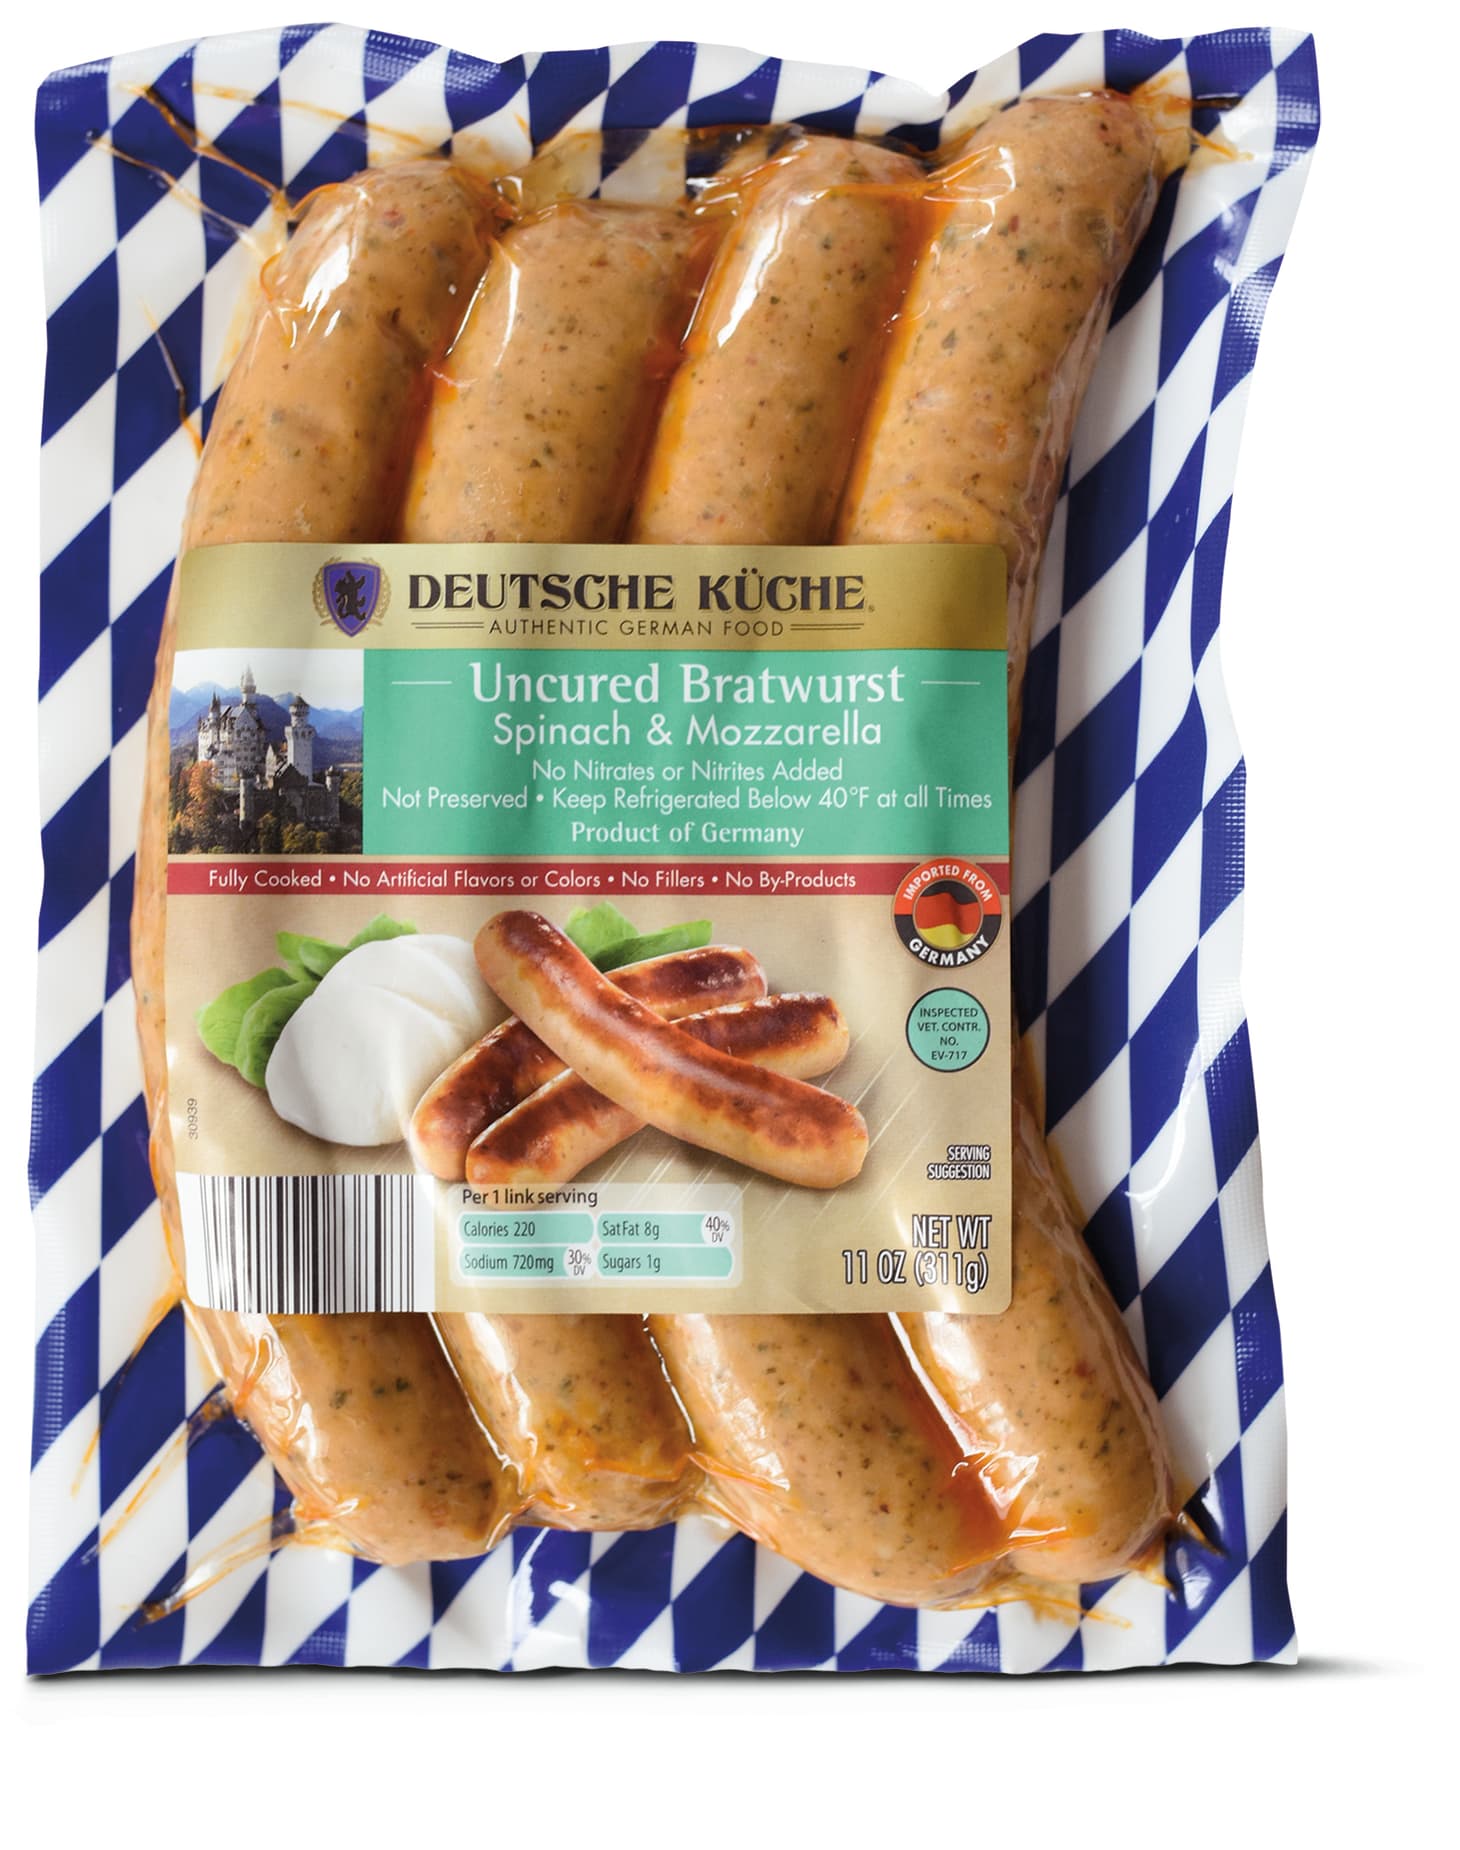 The Perfect Bratwurst